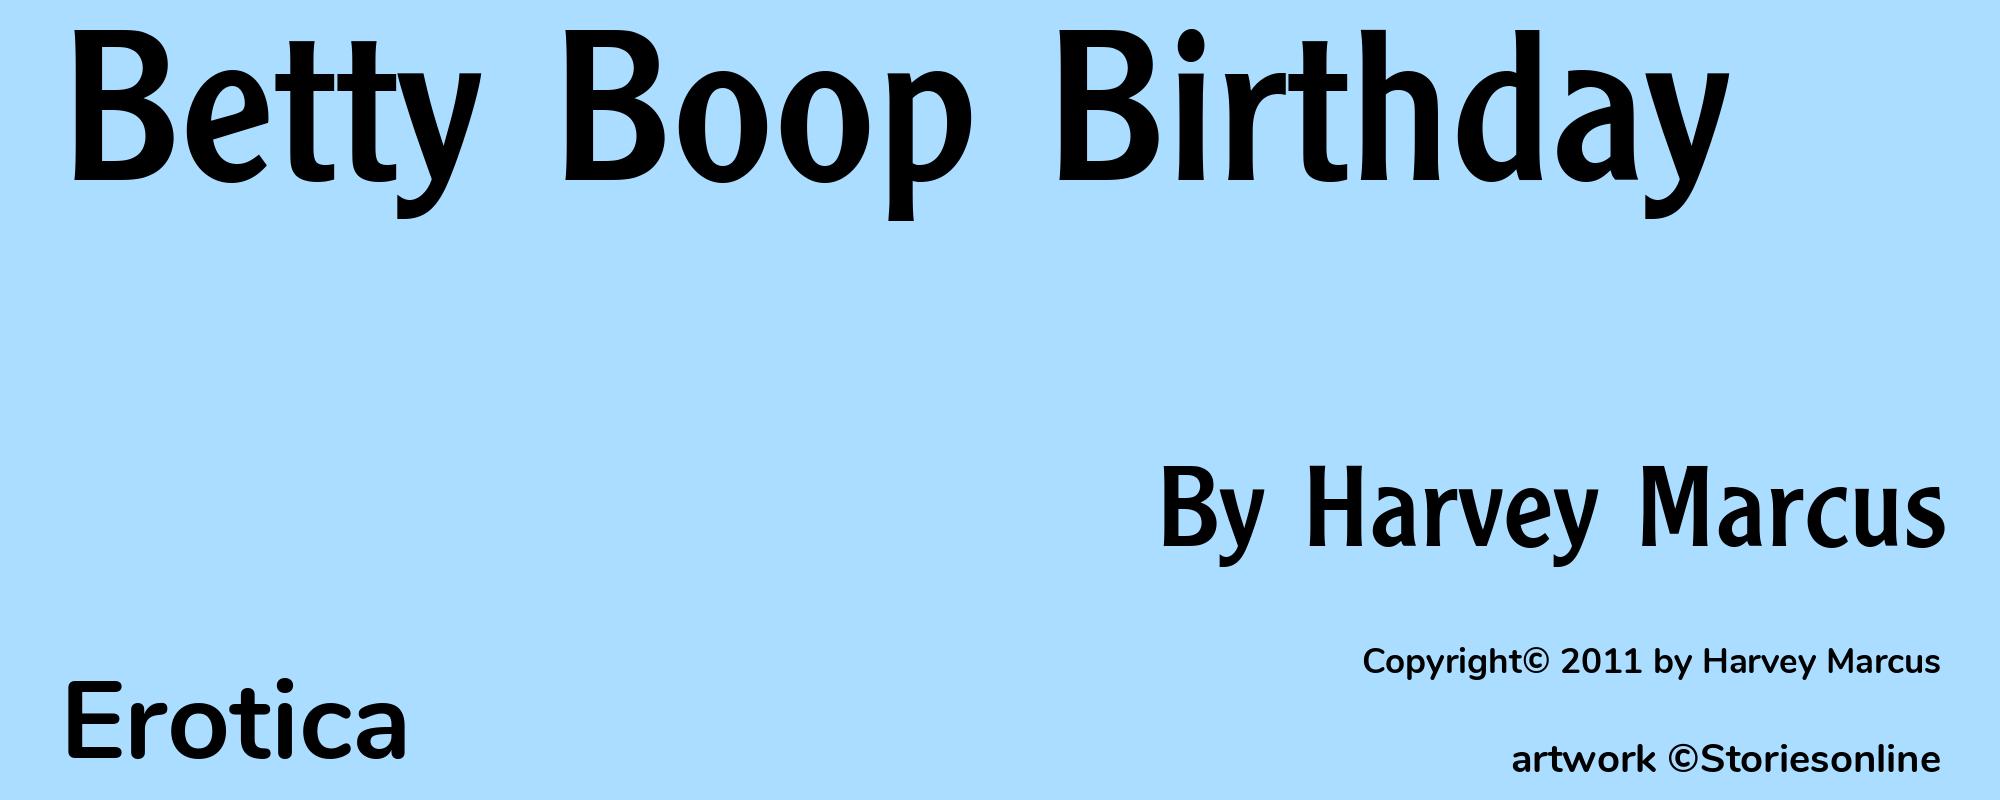 Betty Boop Birthday - Cover